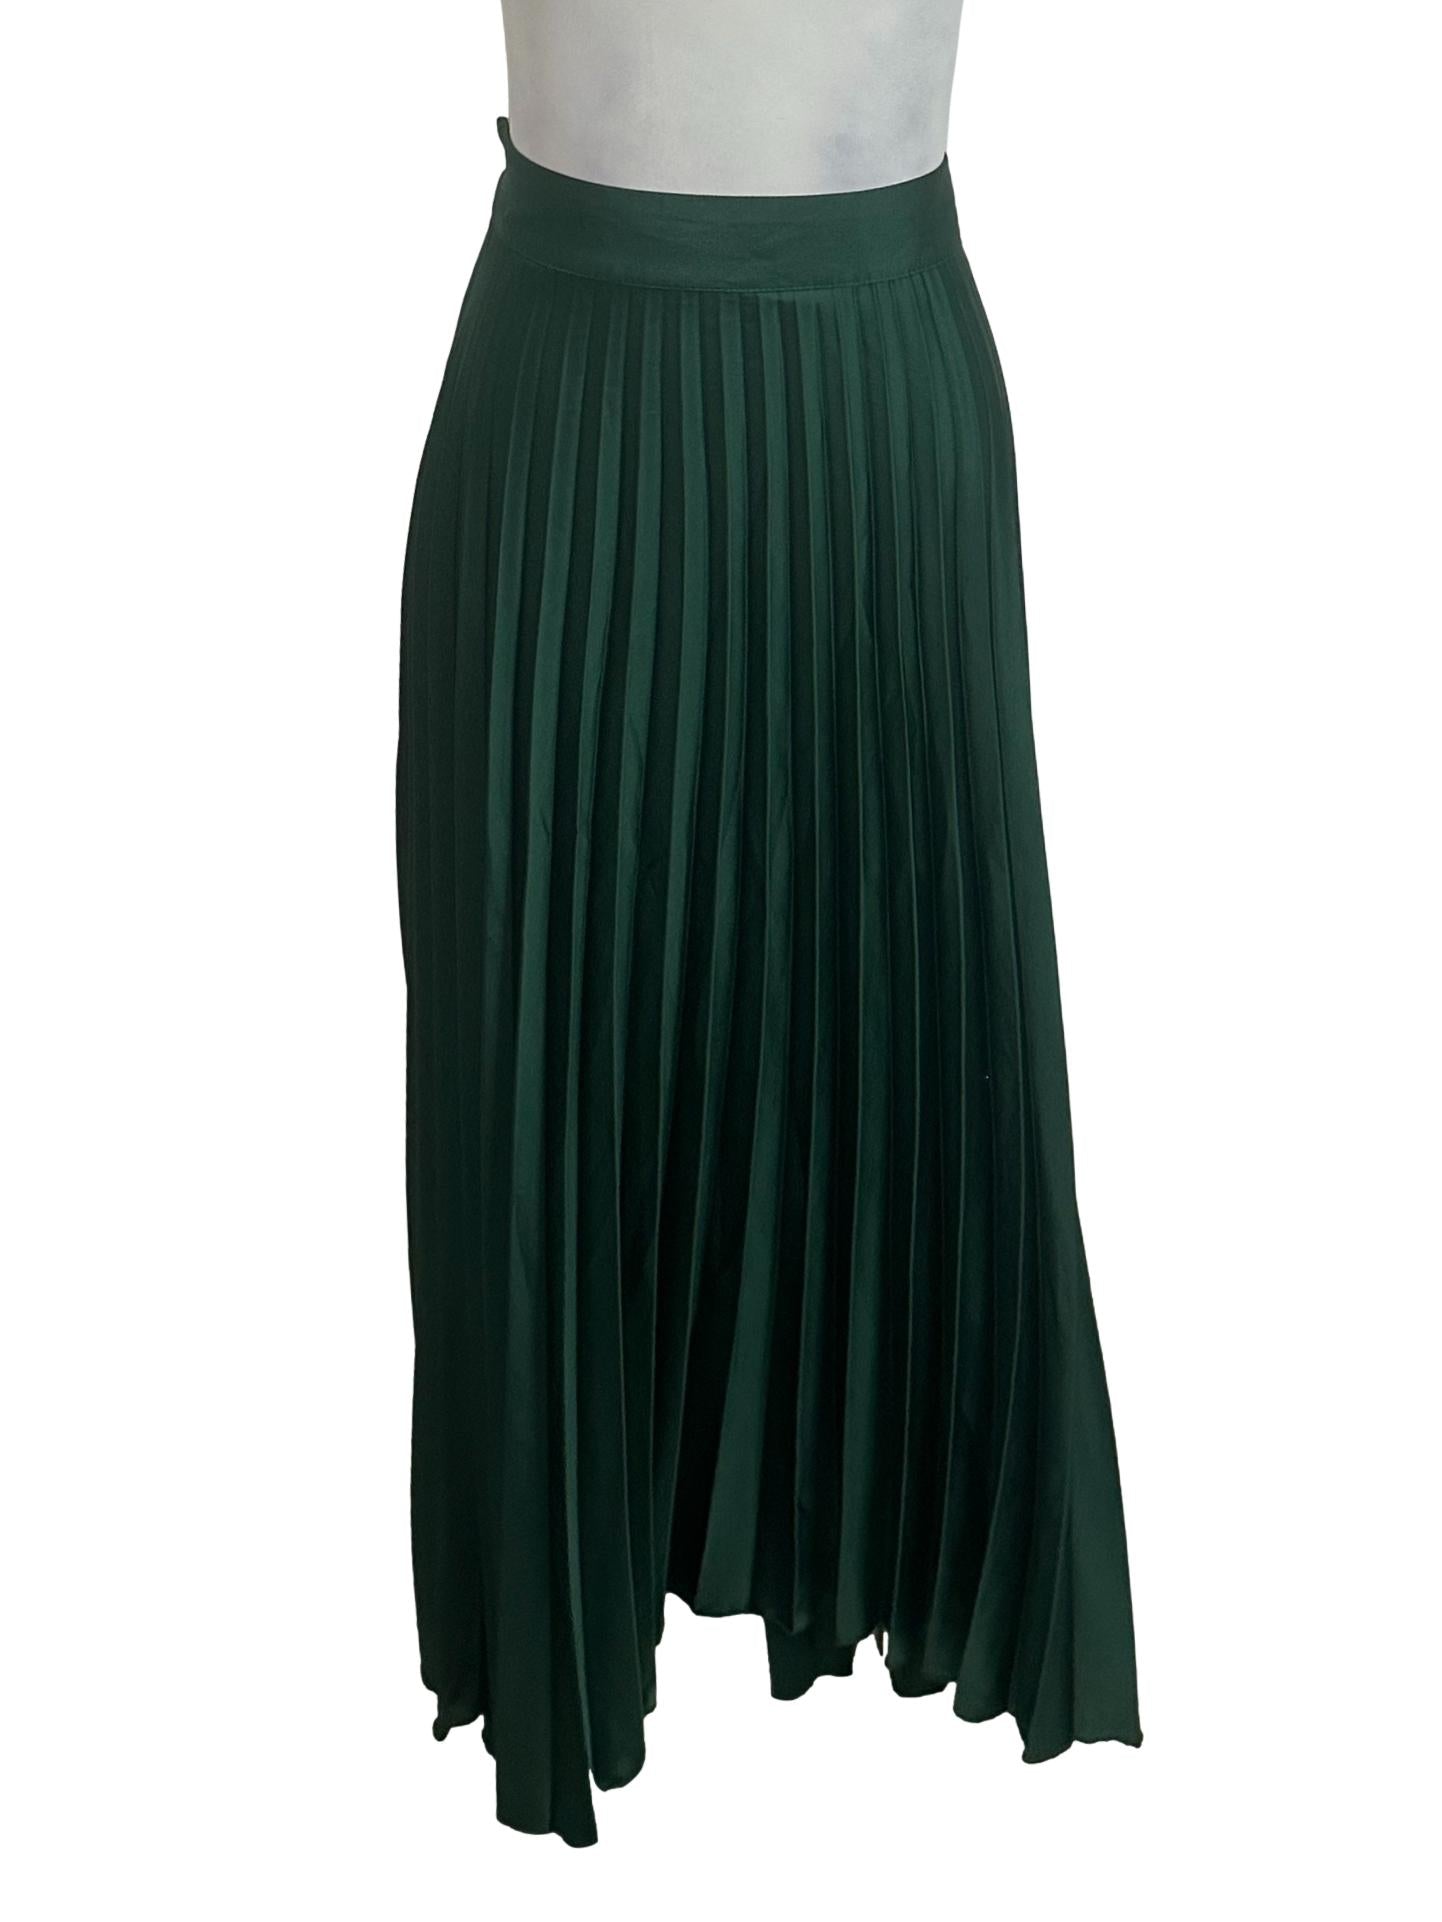 Green Pleat Skirt